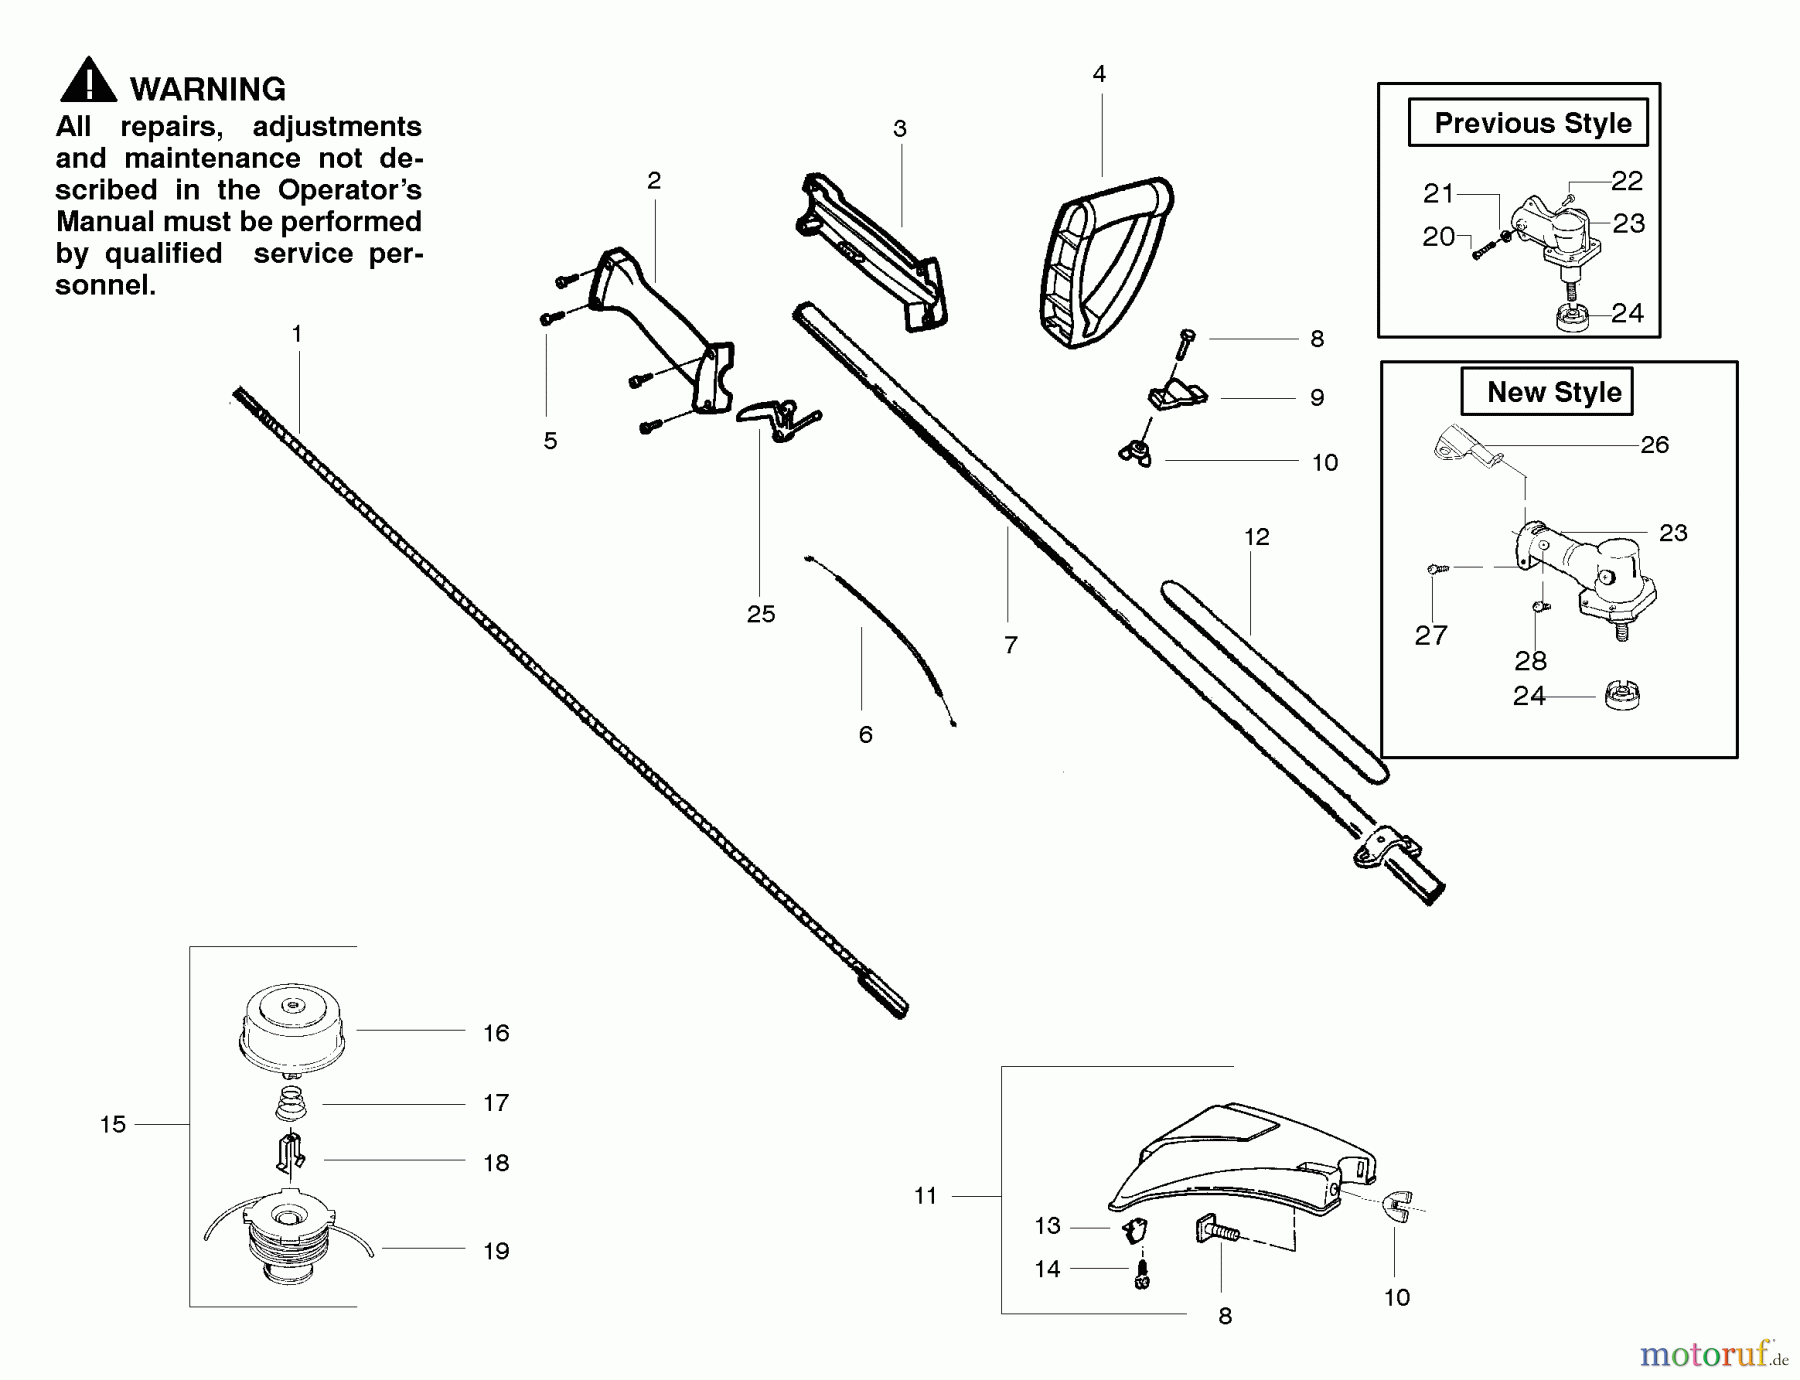  Poulan / Weed Eater Motorsensen, Trimmer XT600 (Type 3) - Weed Eater String Trimmer Handle & Shaft Assembly